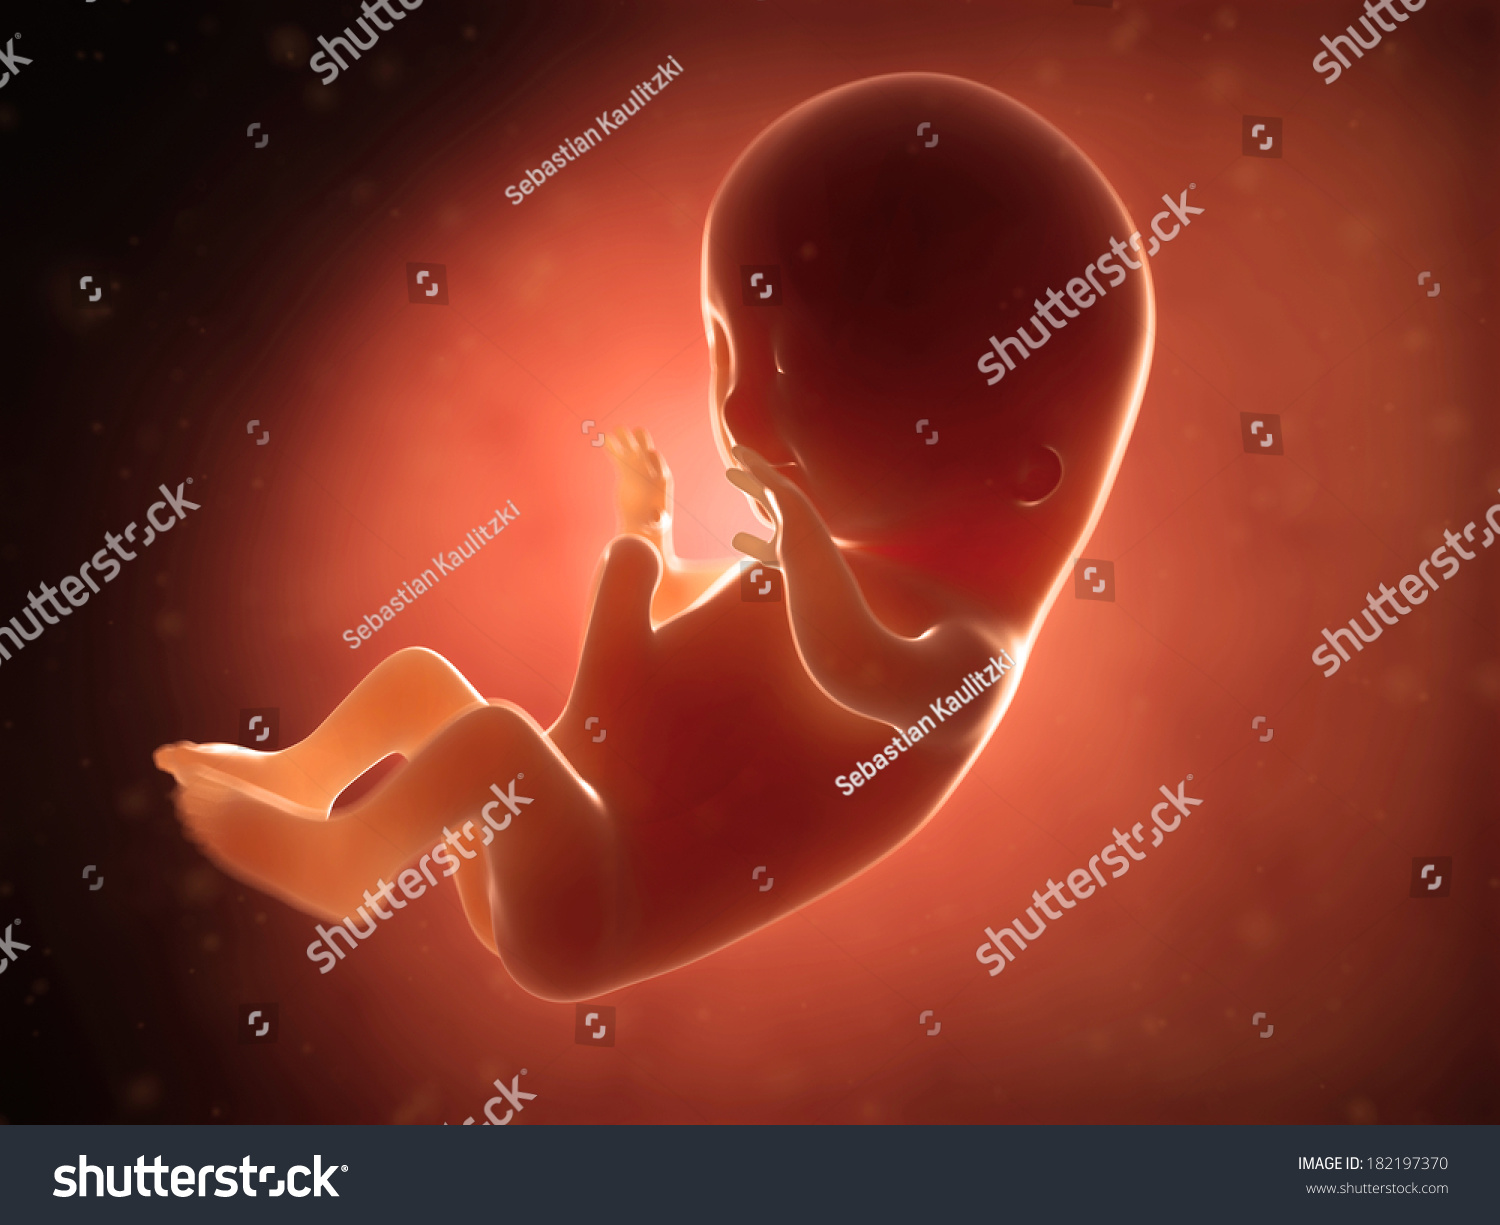 Внутриутробная жизнь ребенка. Плод ребенка.